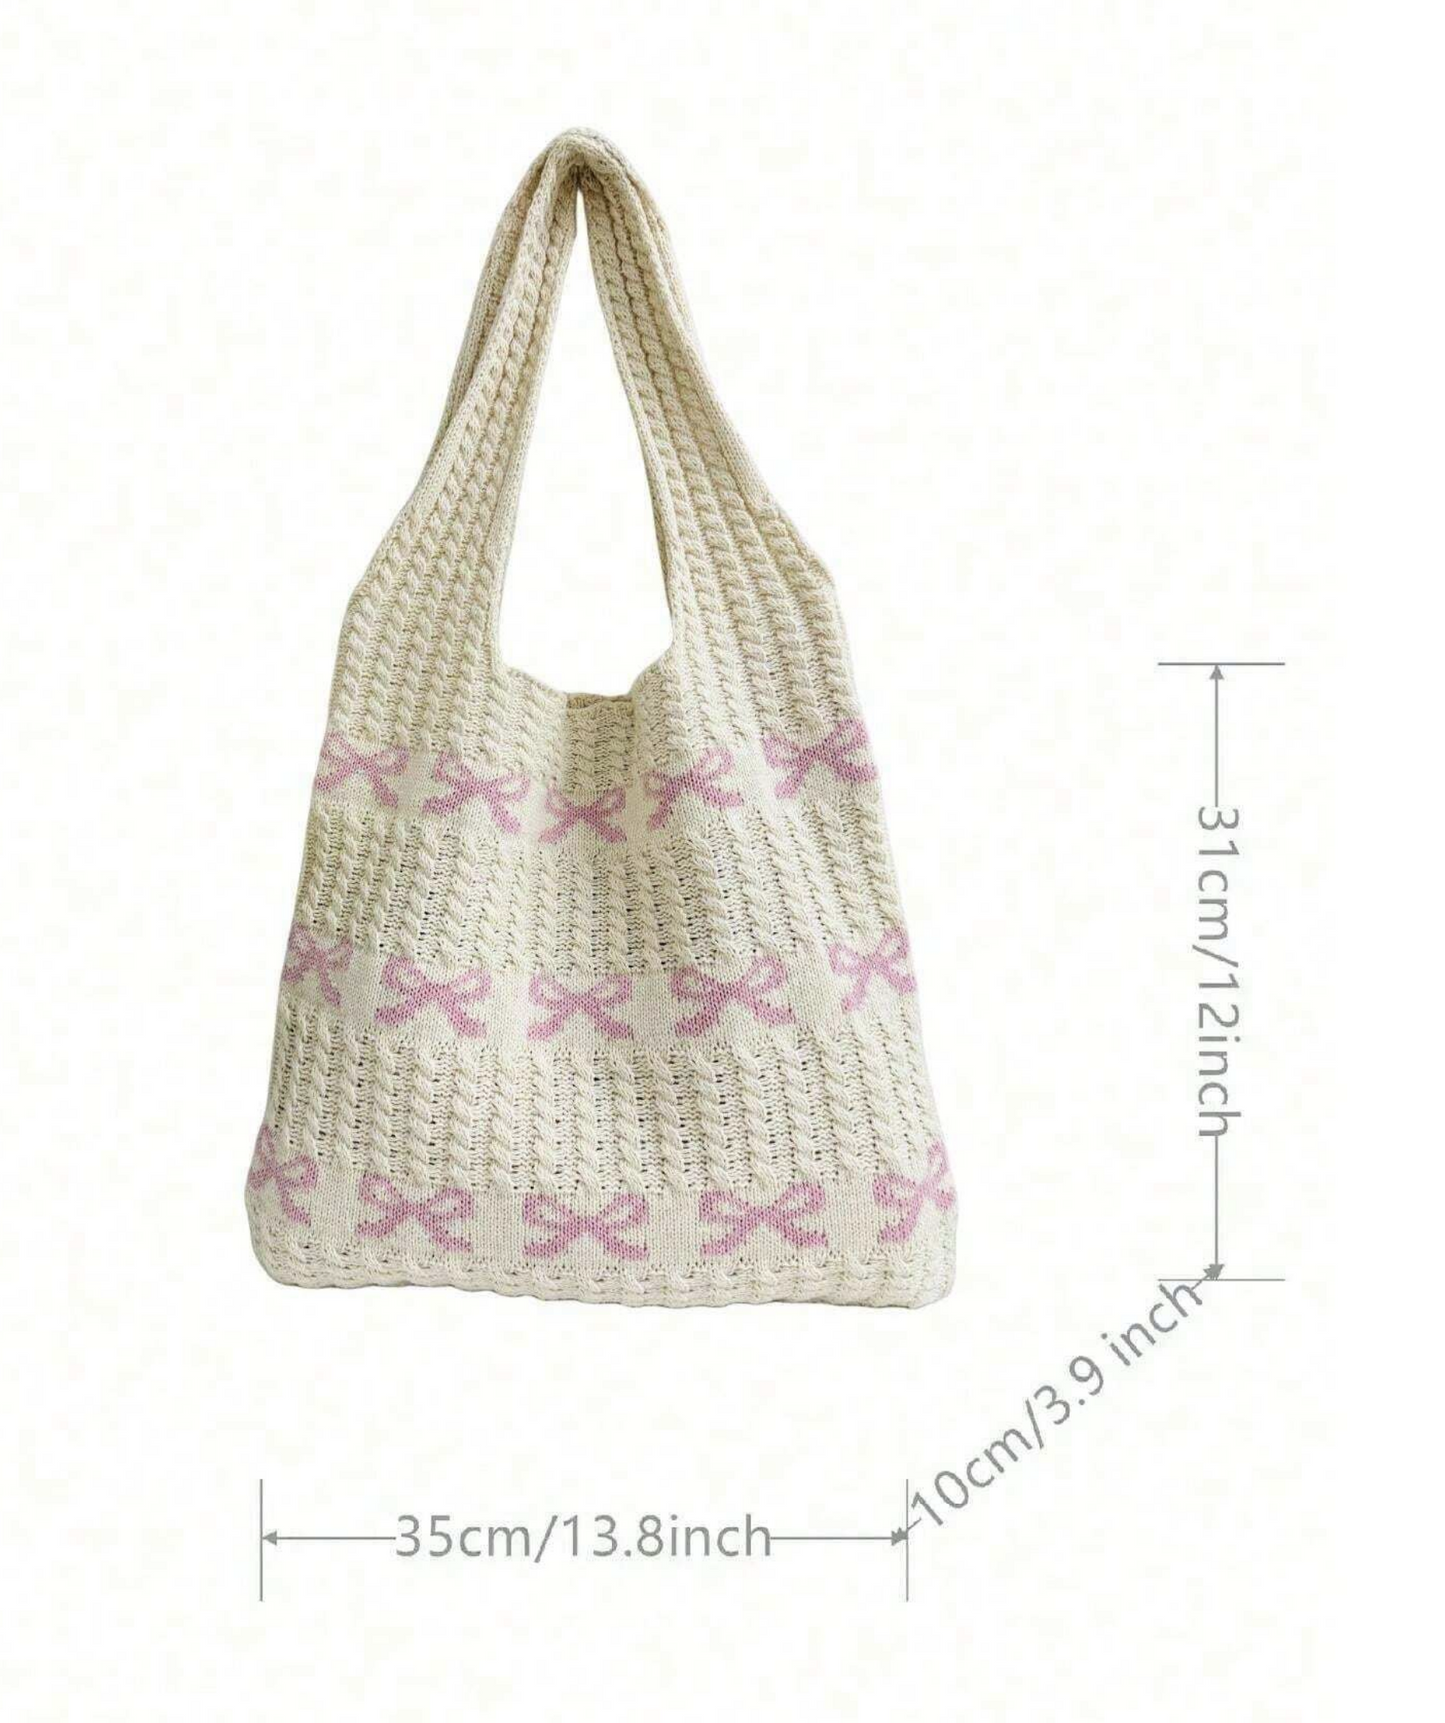 Knit Bow Tote Bag | Coquette Tote Bag | Cute Tote Bag | Coquette Gift Idea | Bridemaids Gift | Birthday Gift Idea